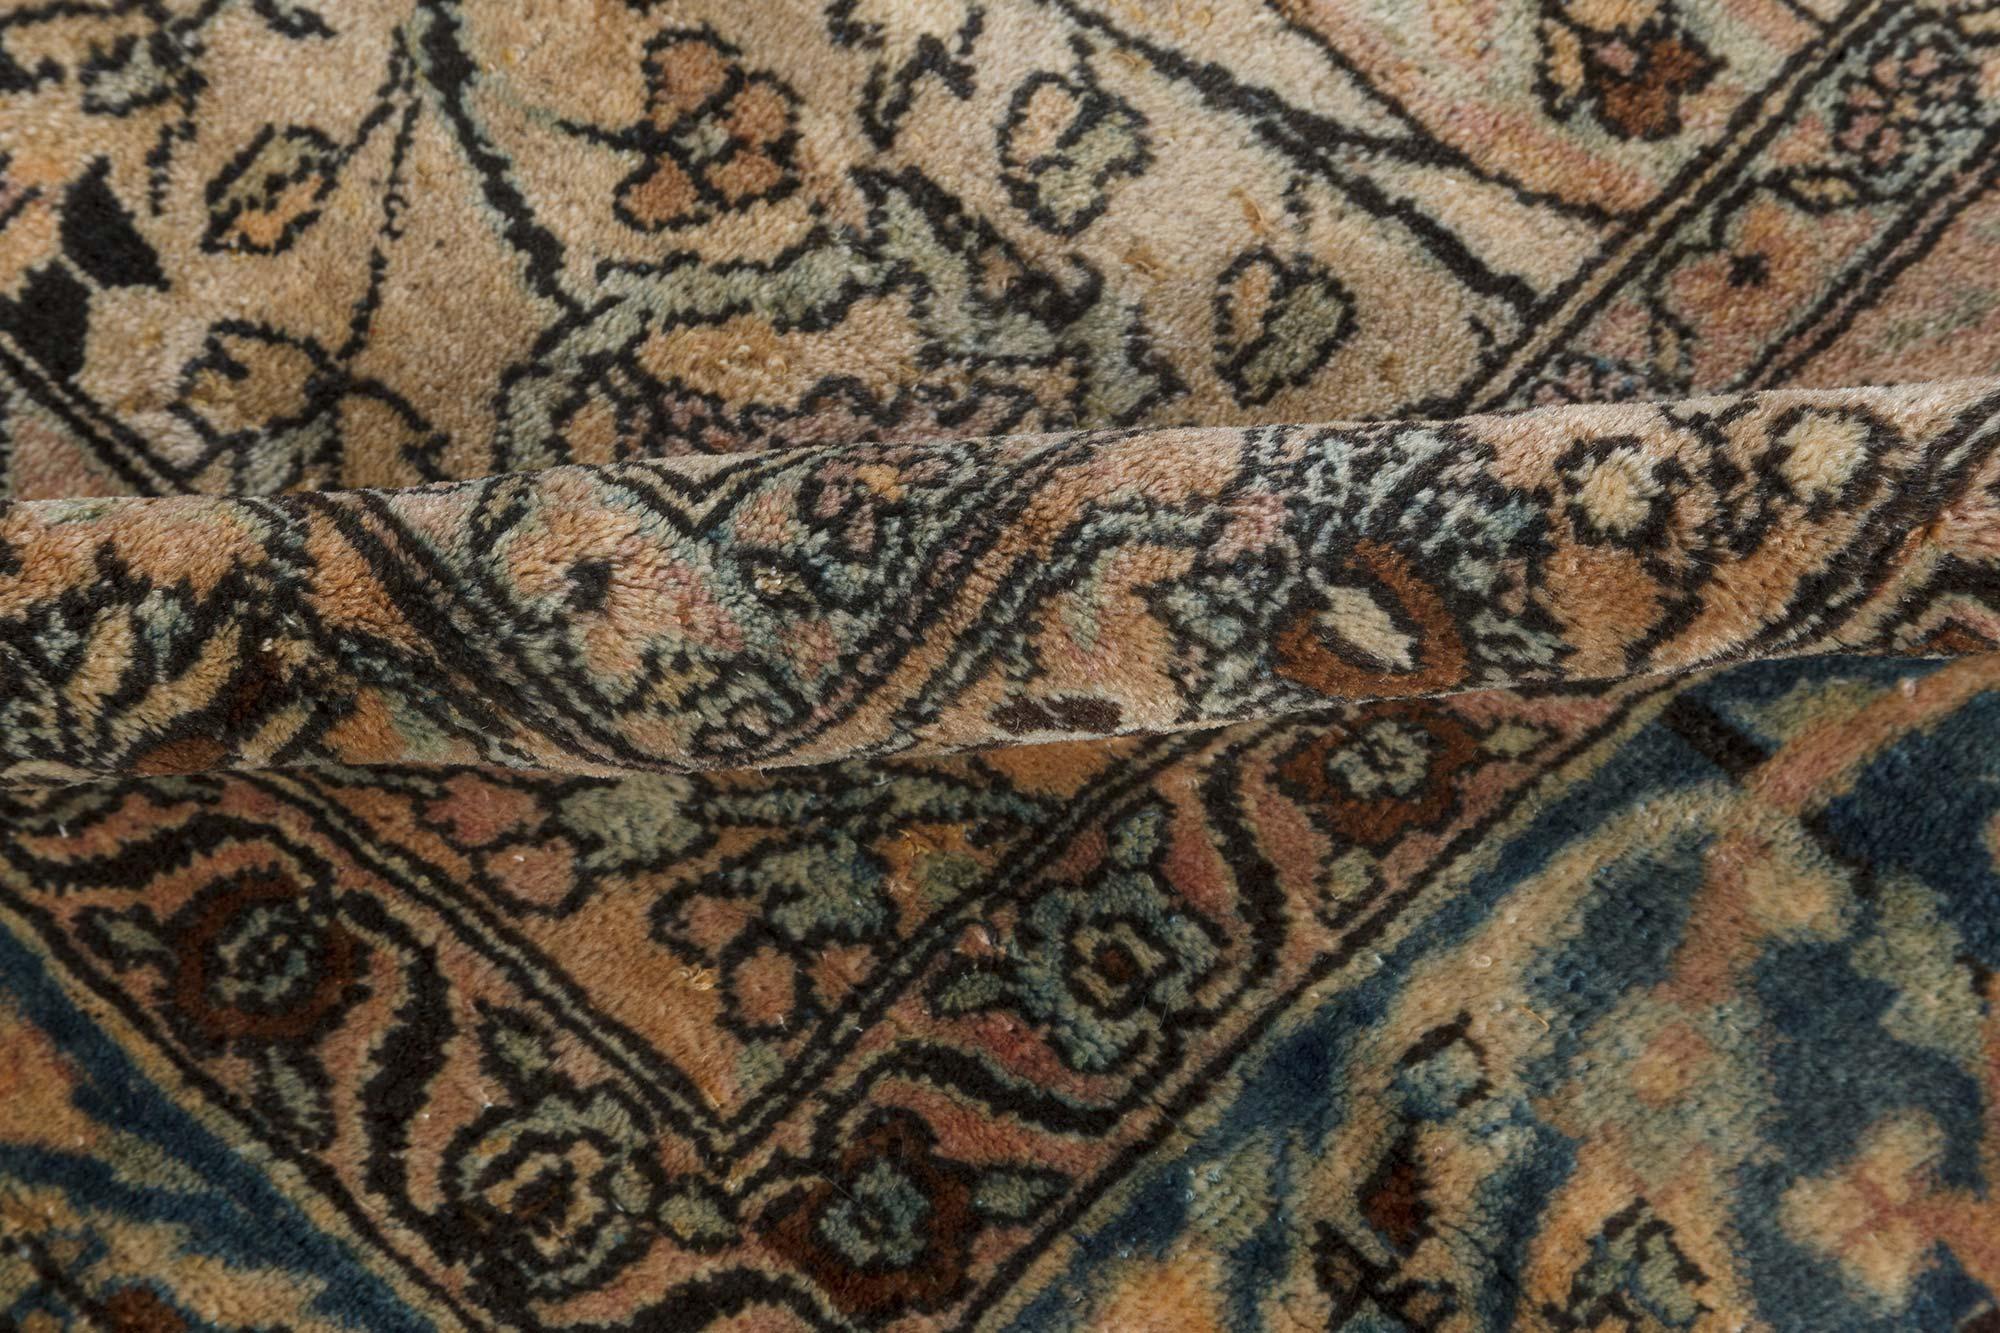 Oversized antique Persian Kirman rug (size adjusted)
Size: 15'6